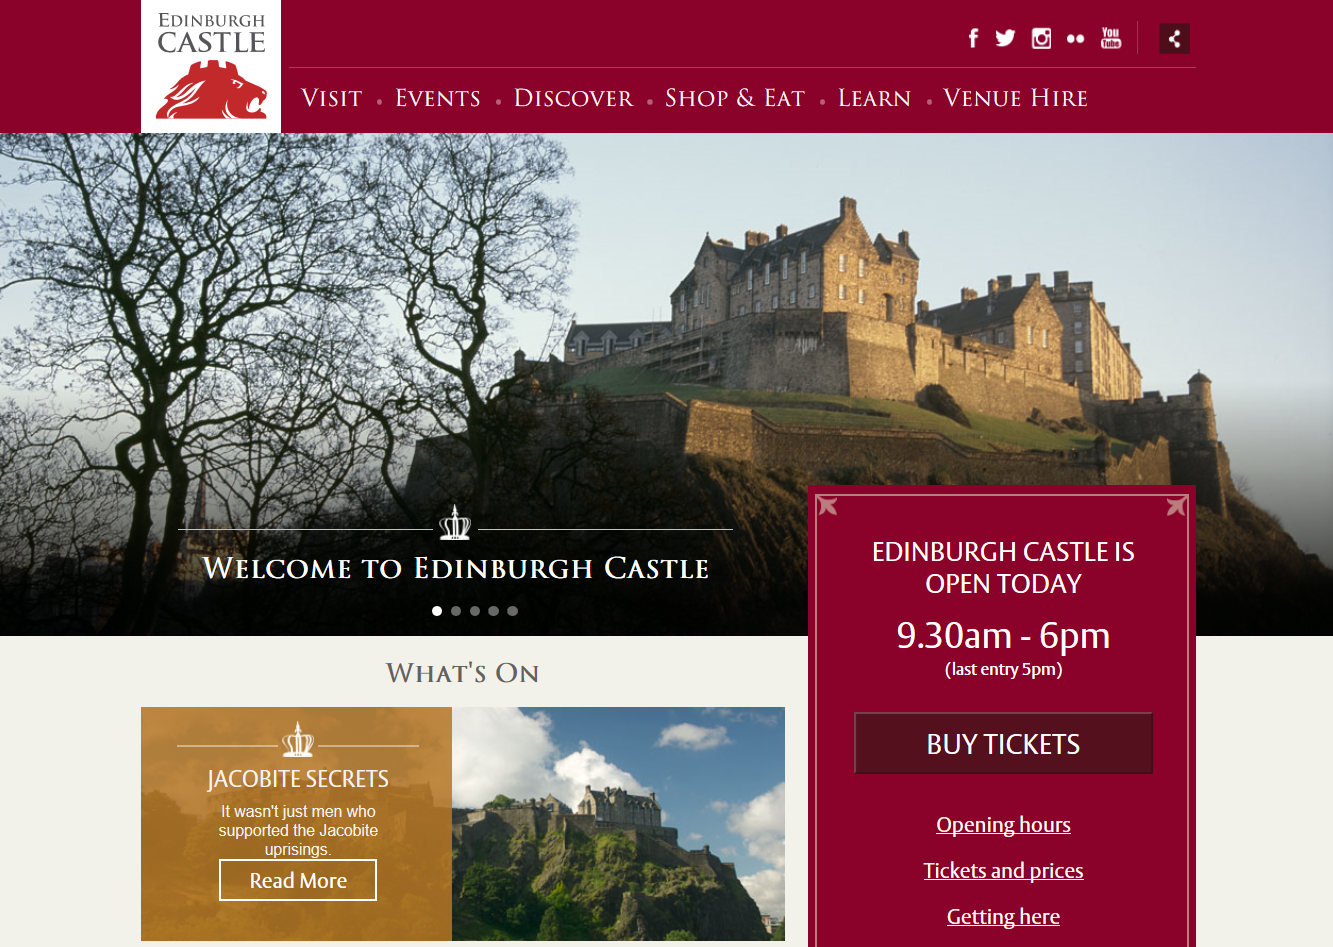 The new Edinburgh Castle website homepage.